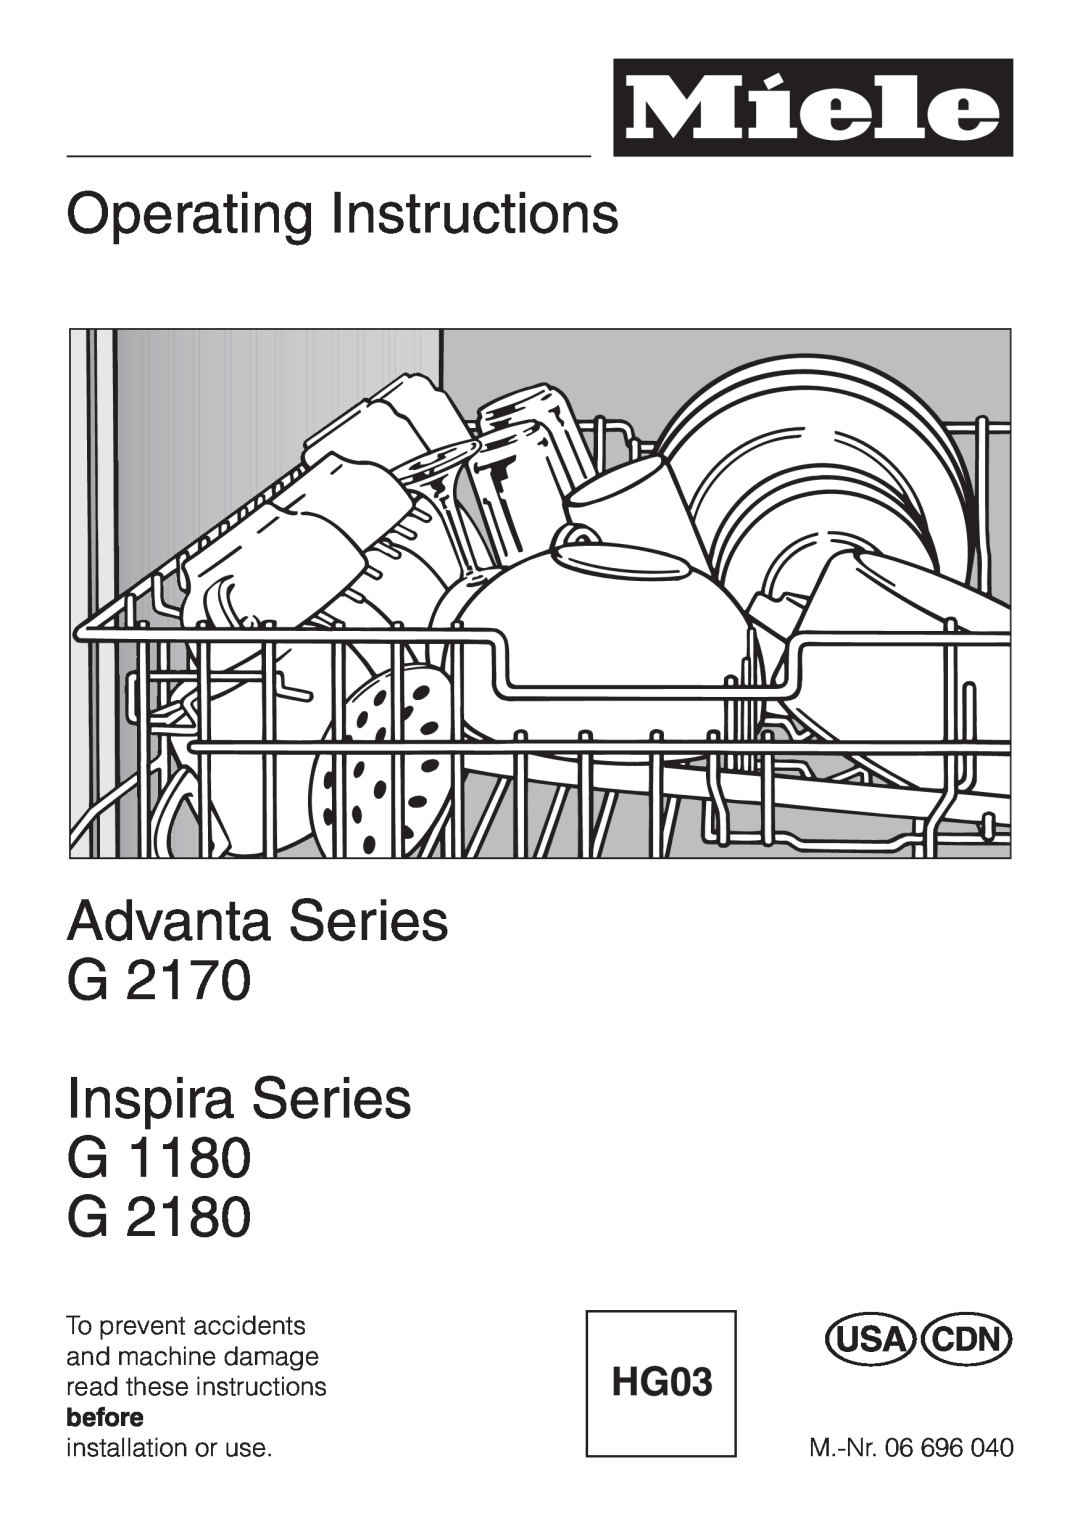 Miele G 2180, G 2170, G 1180 manual Operating Instructions Advanta Series G, Inspira Series G1180 G, en - US, CA 